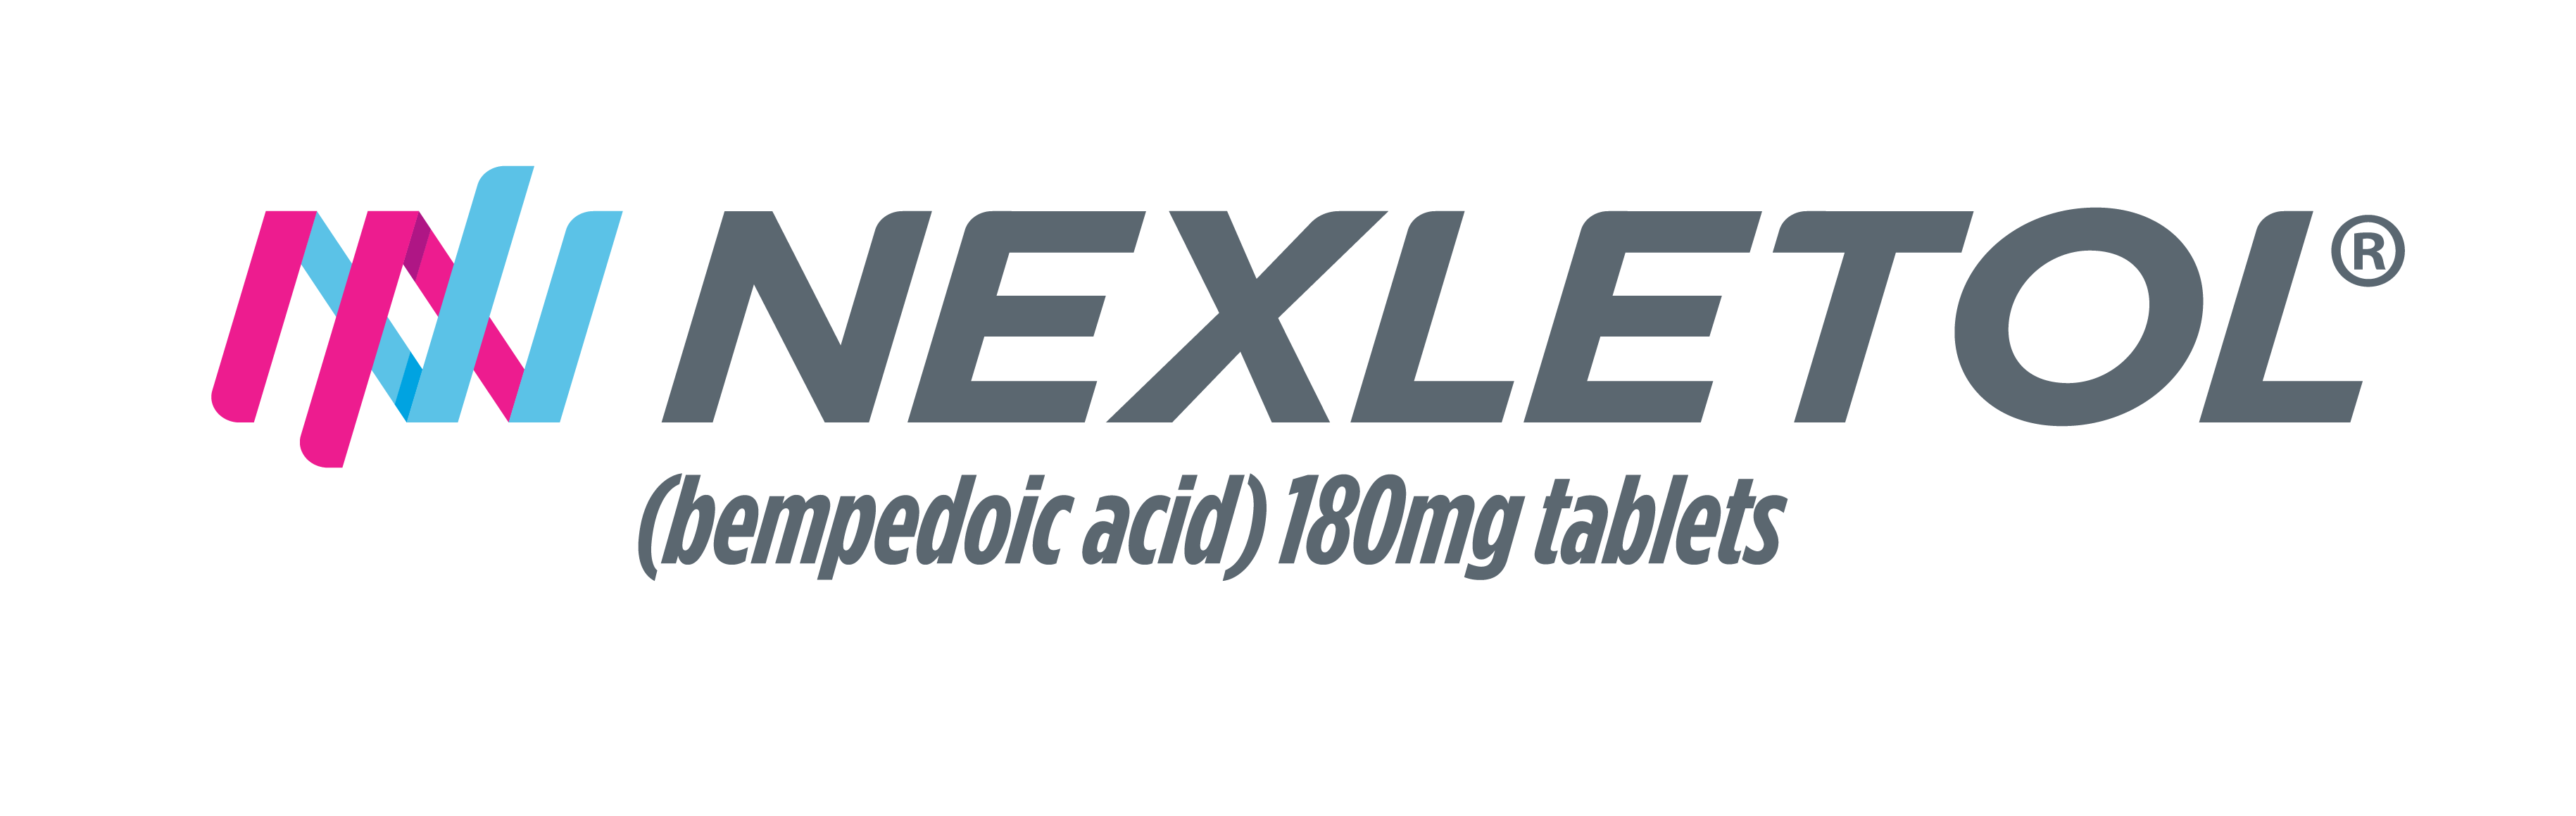 Nexletol Image